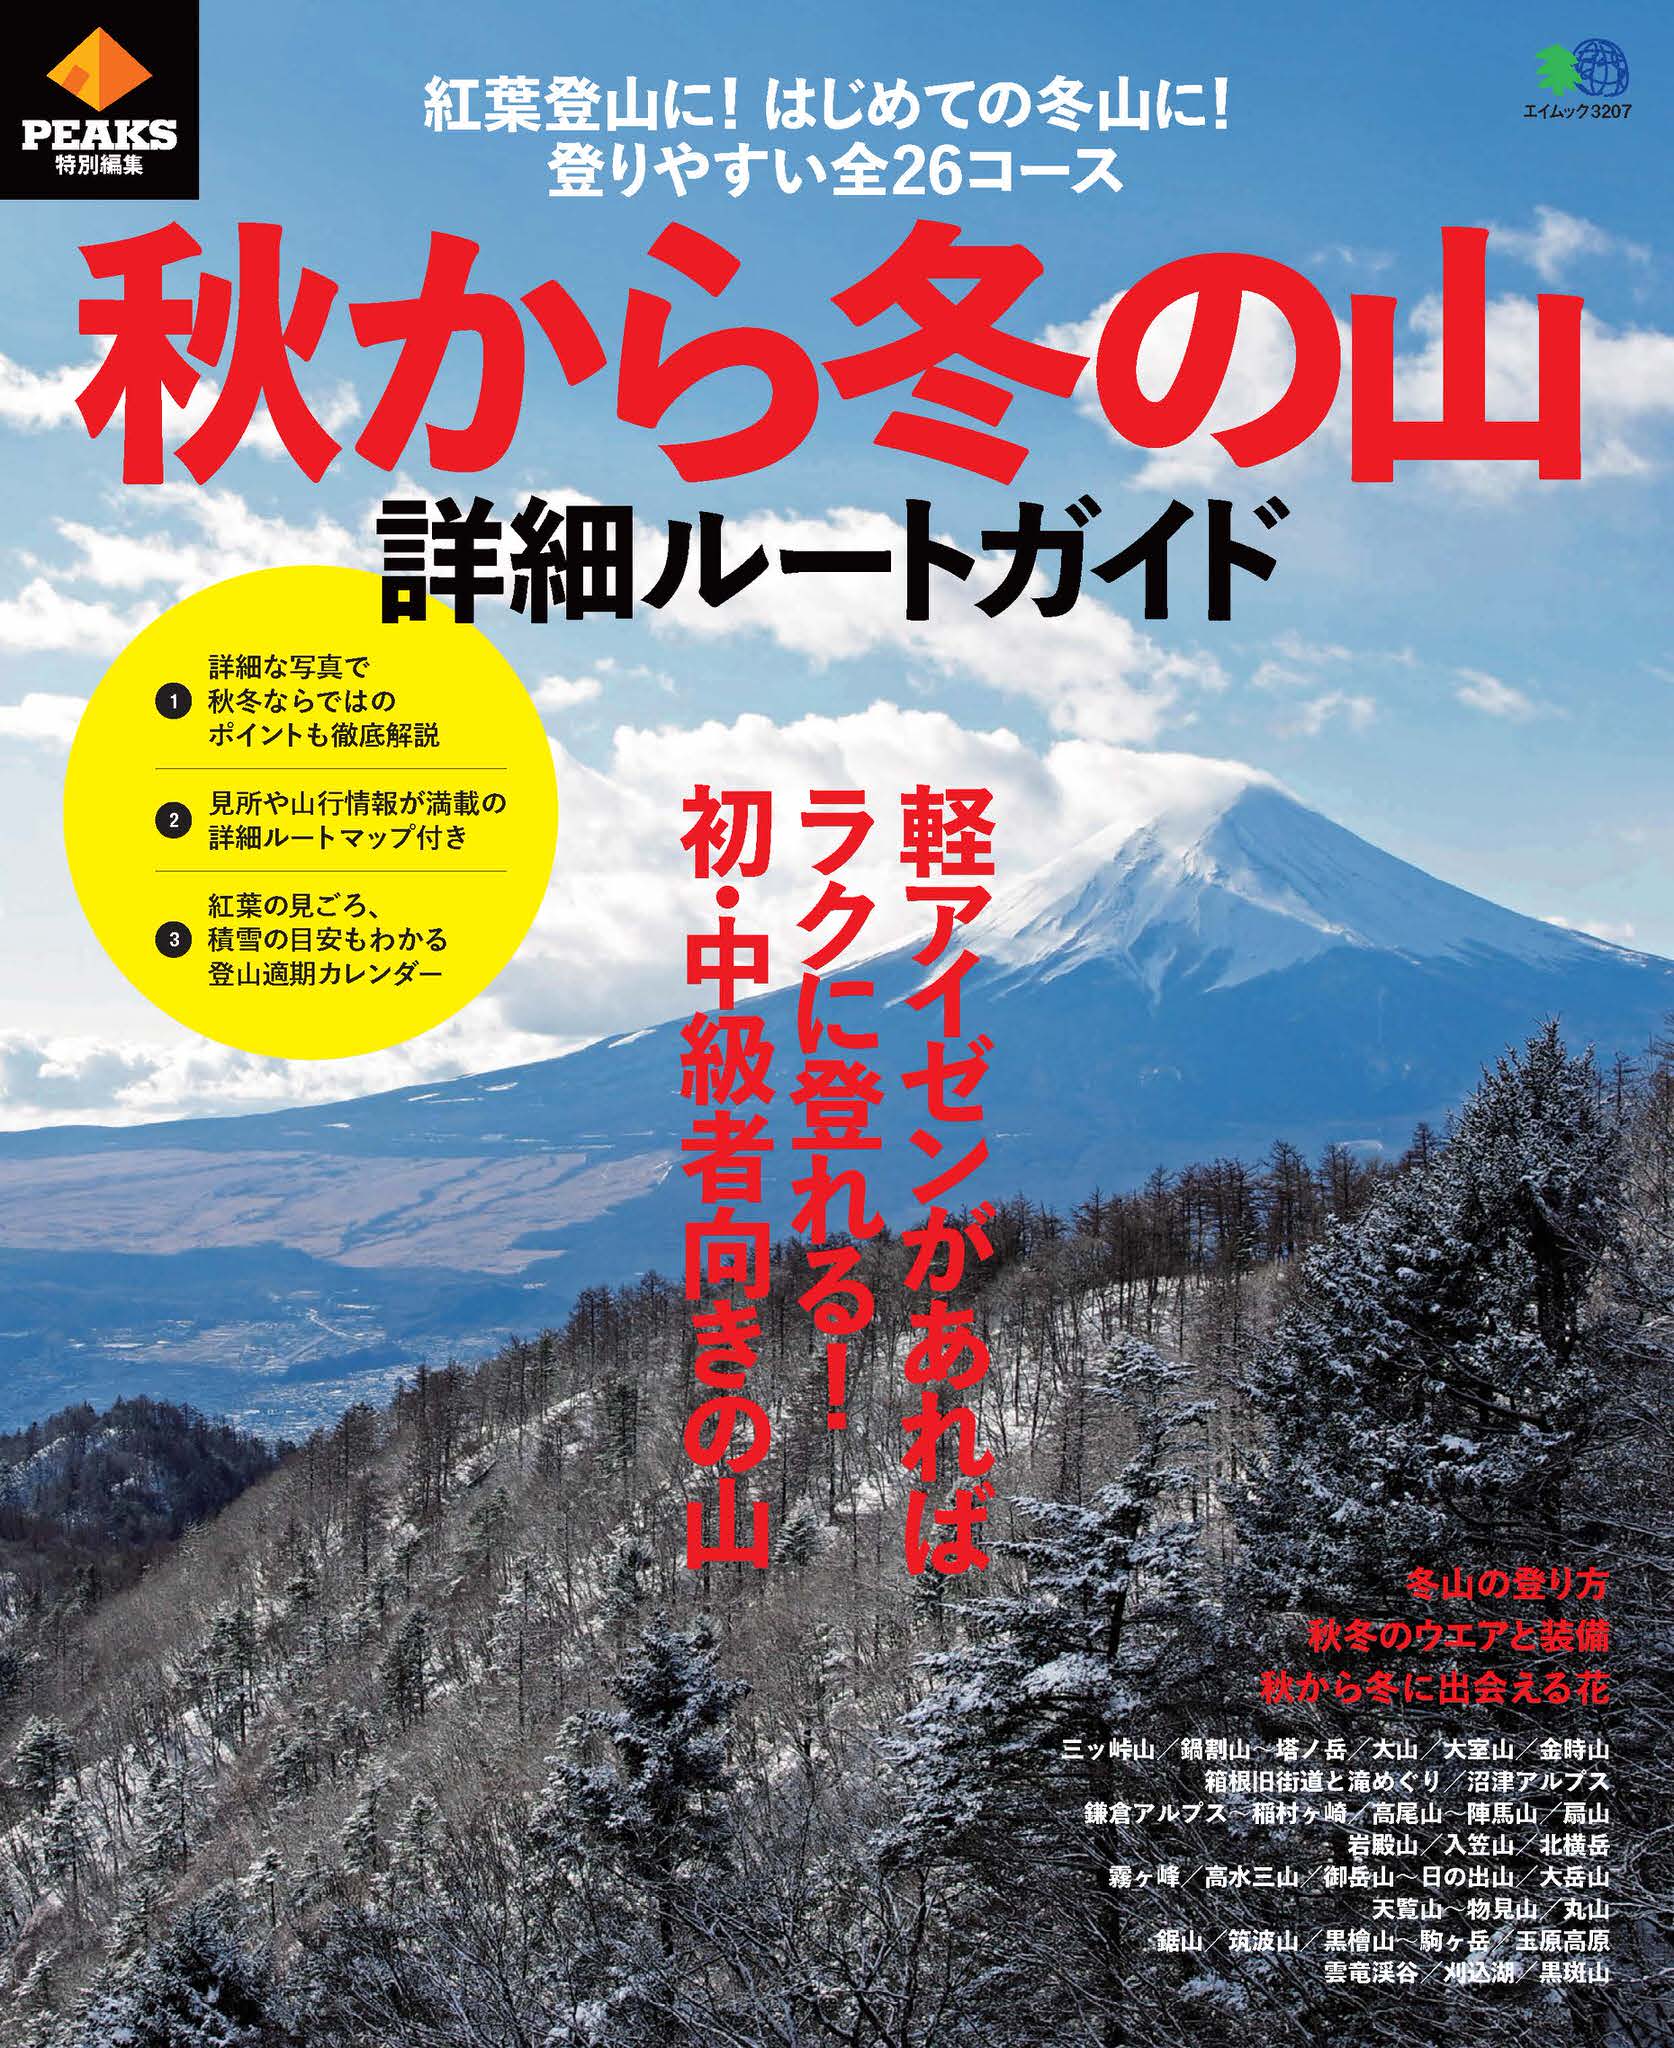 PEAKS特別編集 秋から冬の山詳細ルートガイド